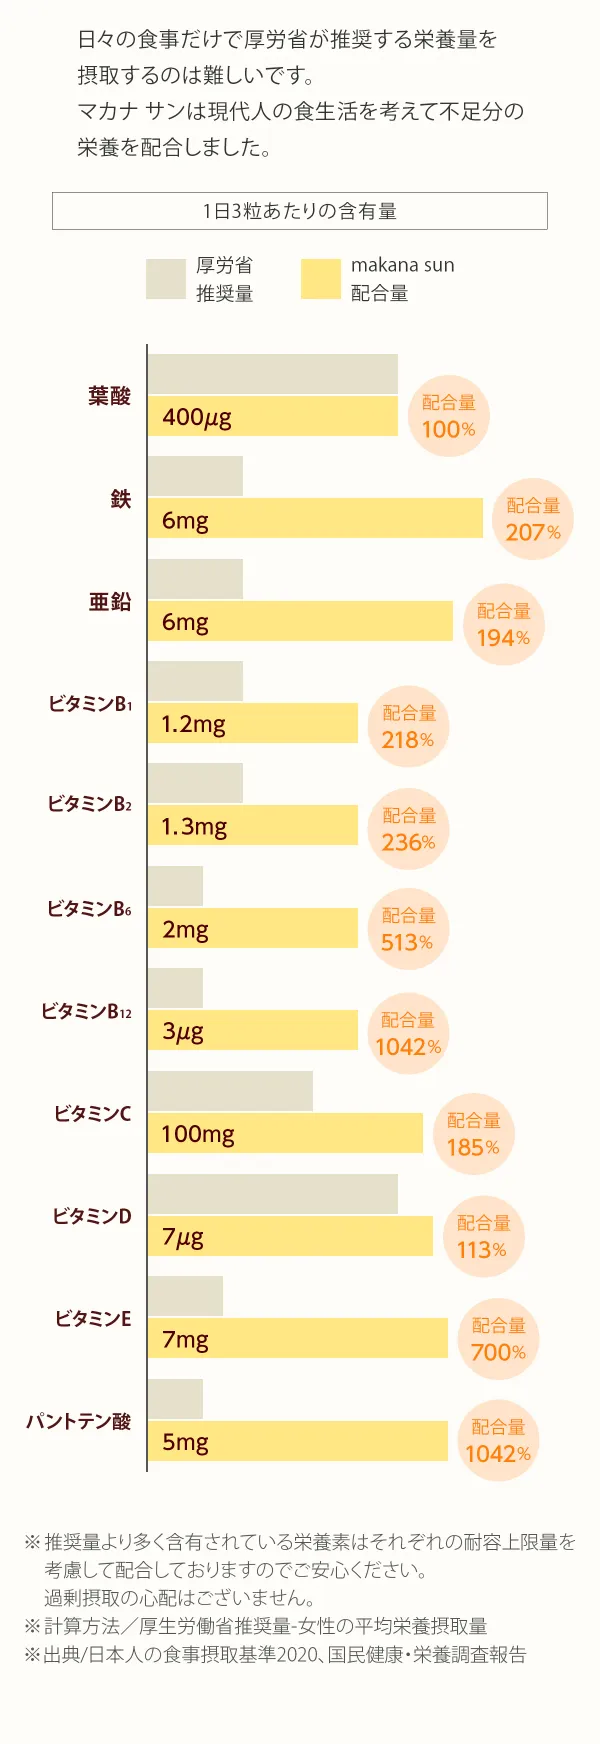 葉酸 400㎍ | 鉄 6mg | 亜鉛 6mg | ビタミンB1 1.2mg | ビタミンB2 1.3mg | ビタミンB6 2mg | ビタミンB12 3μg | ビタミンC 100mg | ビタミンD 7μg | ビタミンE 7mg | パントテン酸 5mg